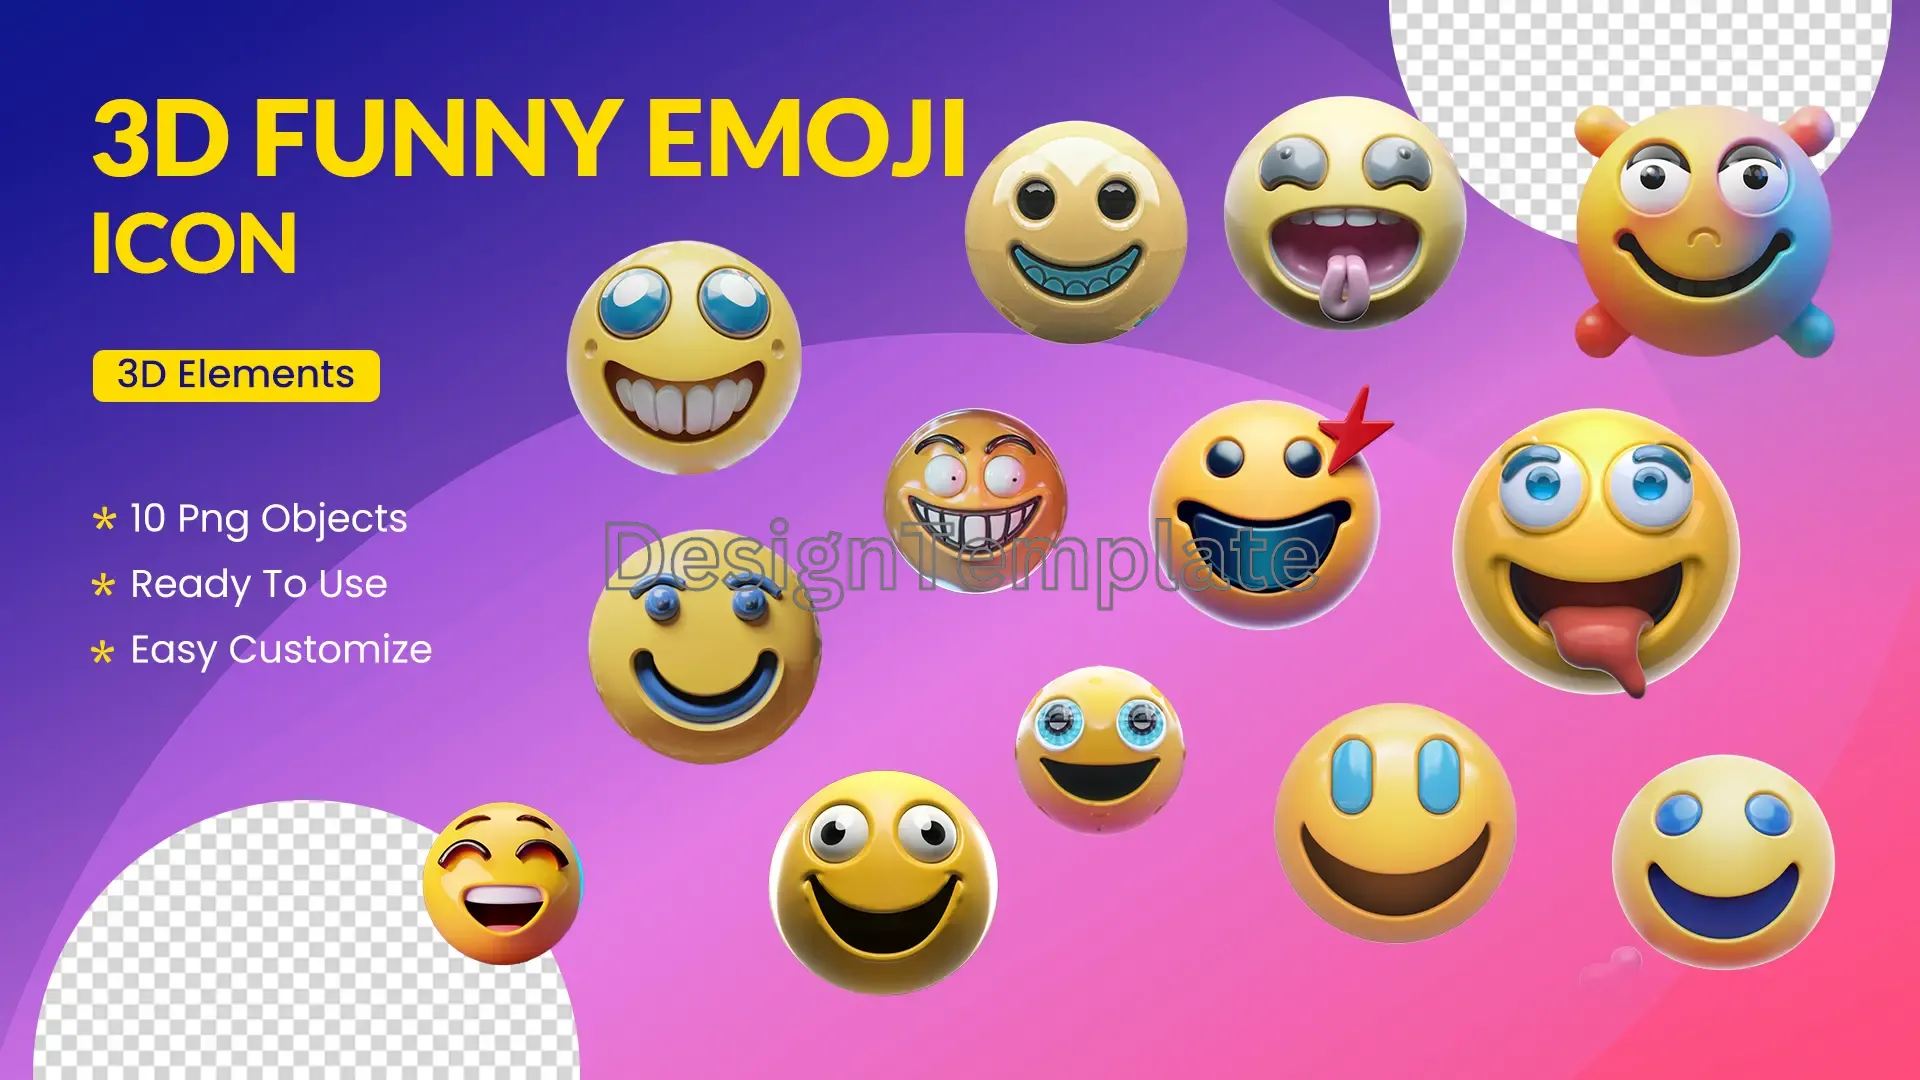 Smiley Spectrum 3D Funny Emoji Icon Collection